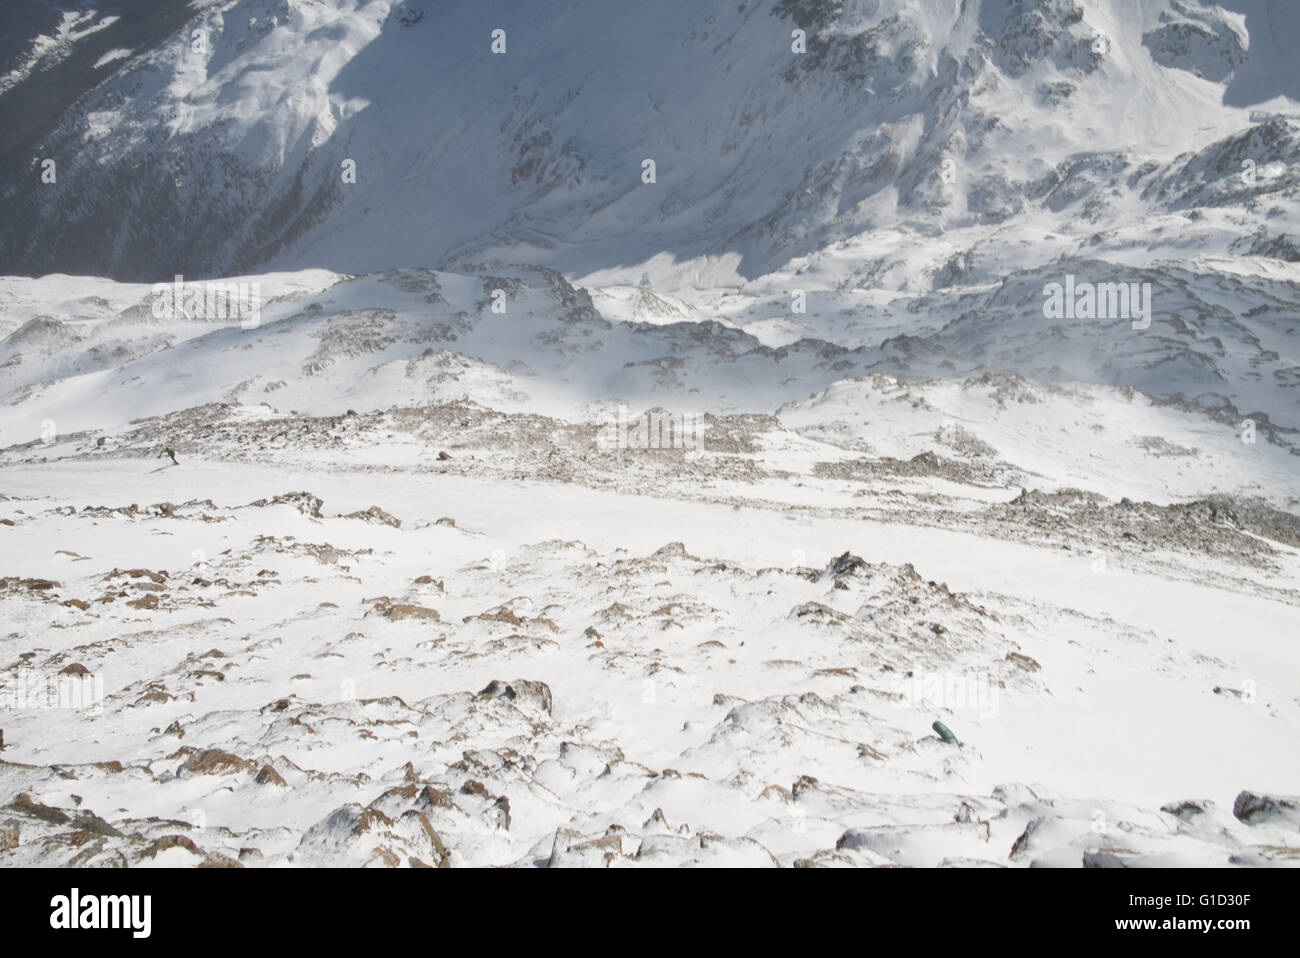 Snowy mountain landscape in winter Stock Photo